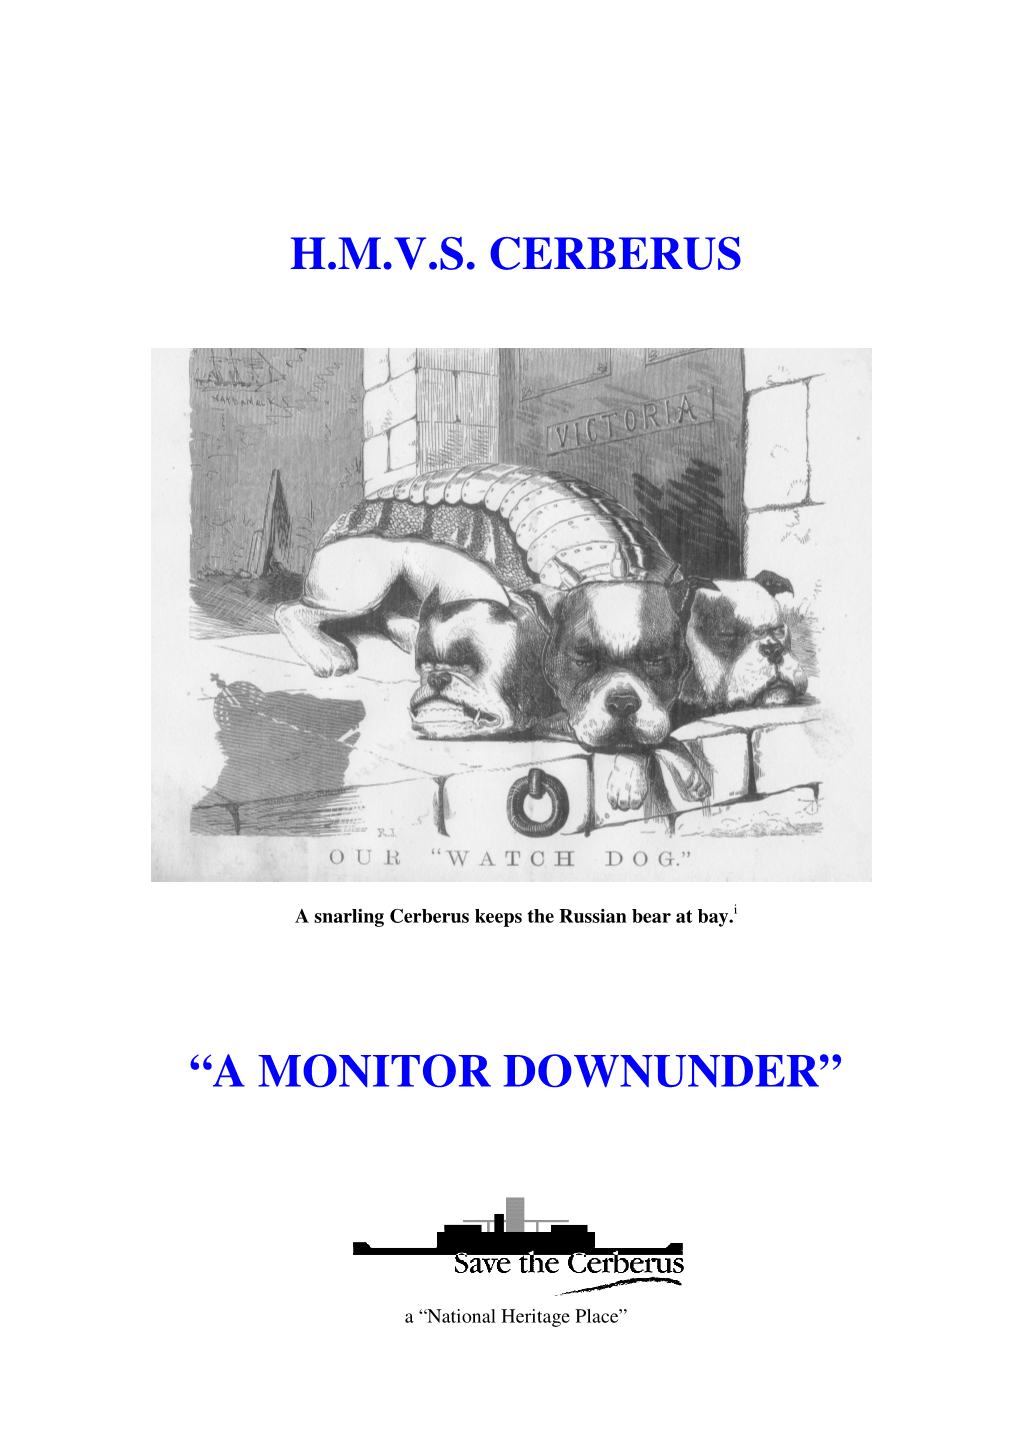 H.M.V.S. Cerberus “A Monitor Downunder”